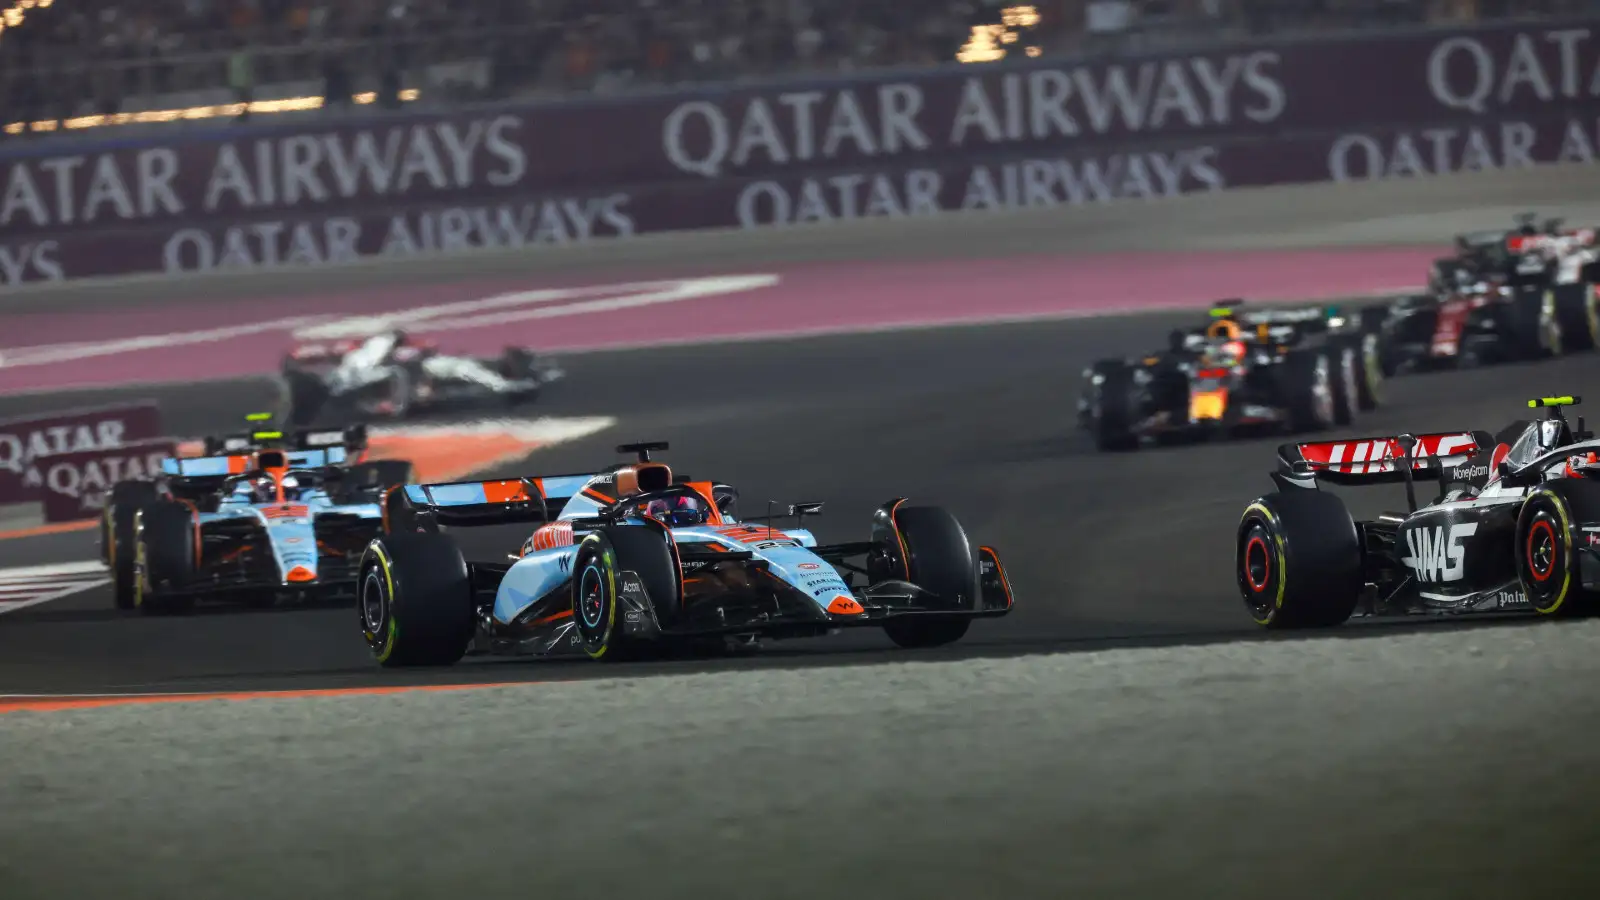 Williams' Alex Albon in action during the Qatar Grand Prix.